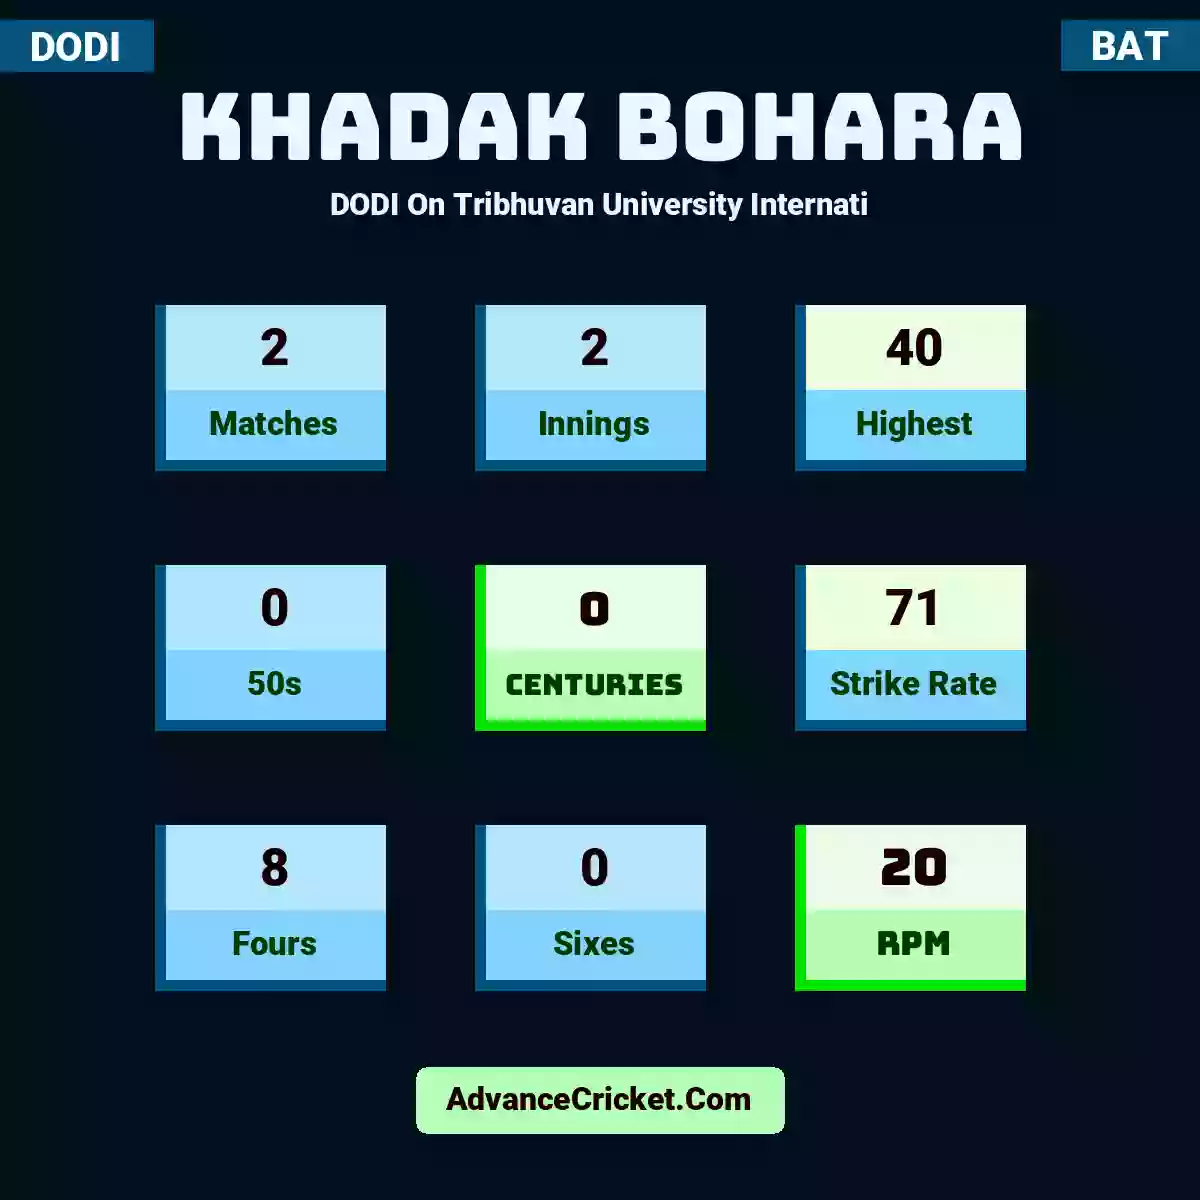 Khadak Bohara DODI  On Tribhuvan University Internati, Khadak Bohara played 2 matches, scored 40 runs as highest, 0 half-centuries, and 0 centuries, with a strike rate of 71. K.Bohara hit 8 fours and 0 sixes, with an RPM of 20.